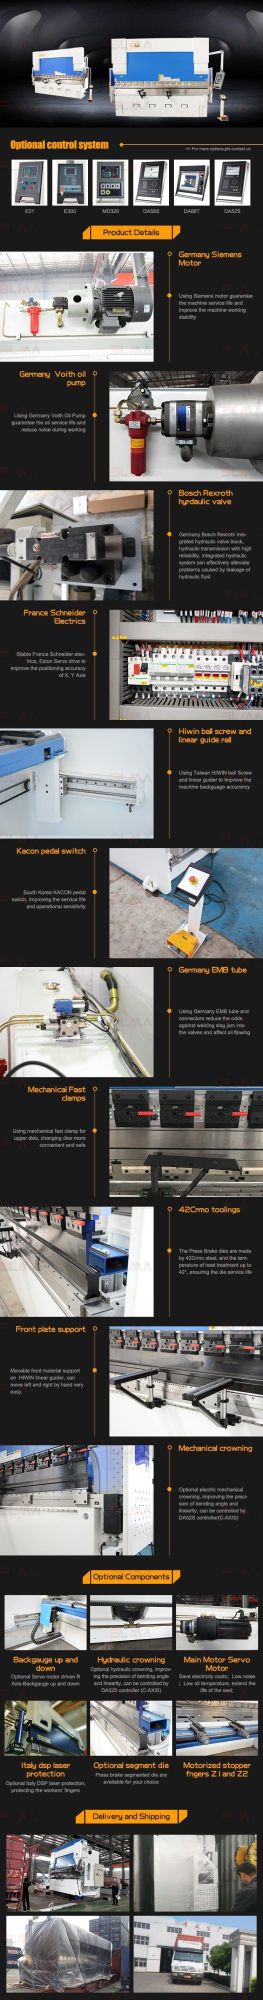 Sheet Metal Brake Sale Hydraulic CNC Bending Press Break Machine